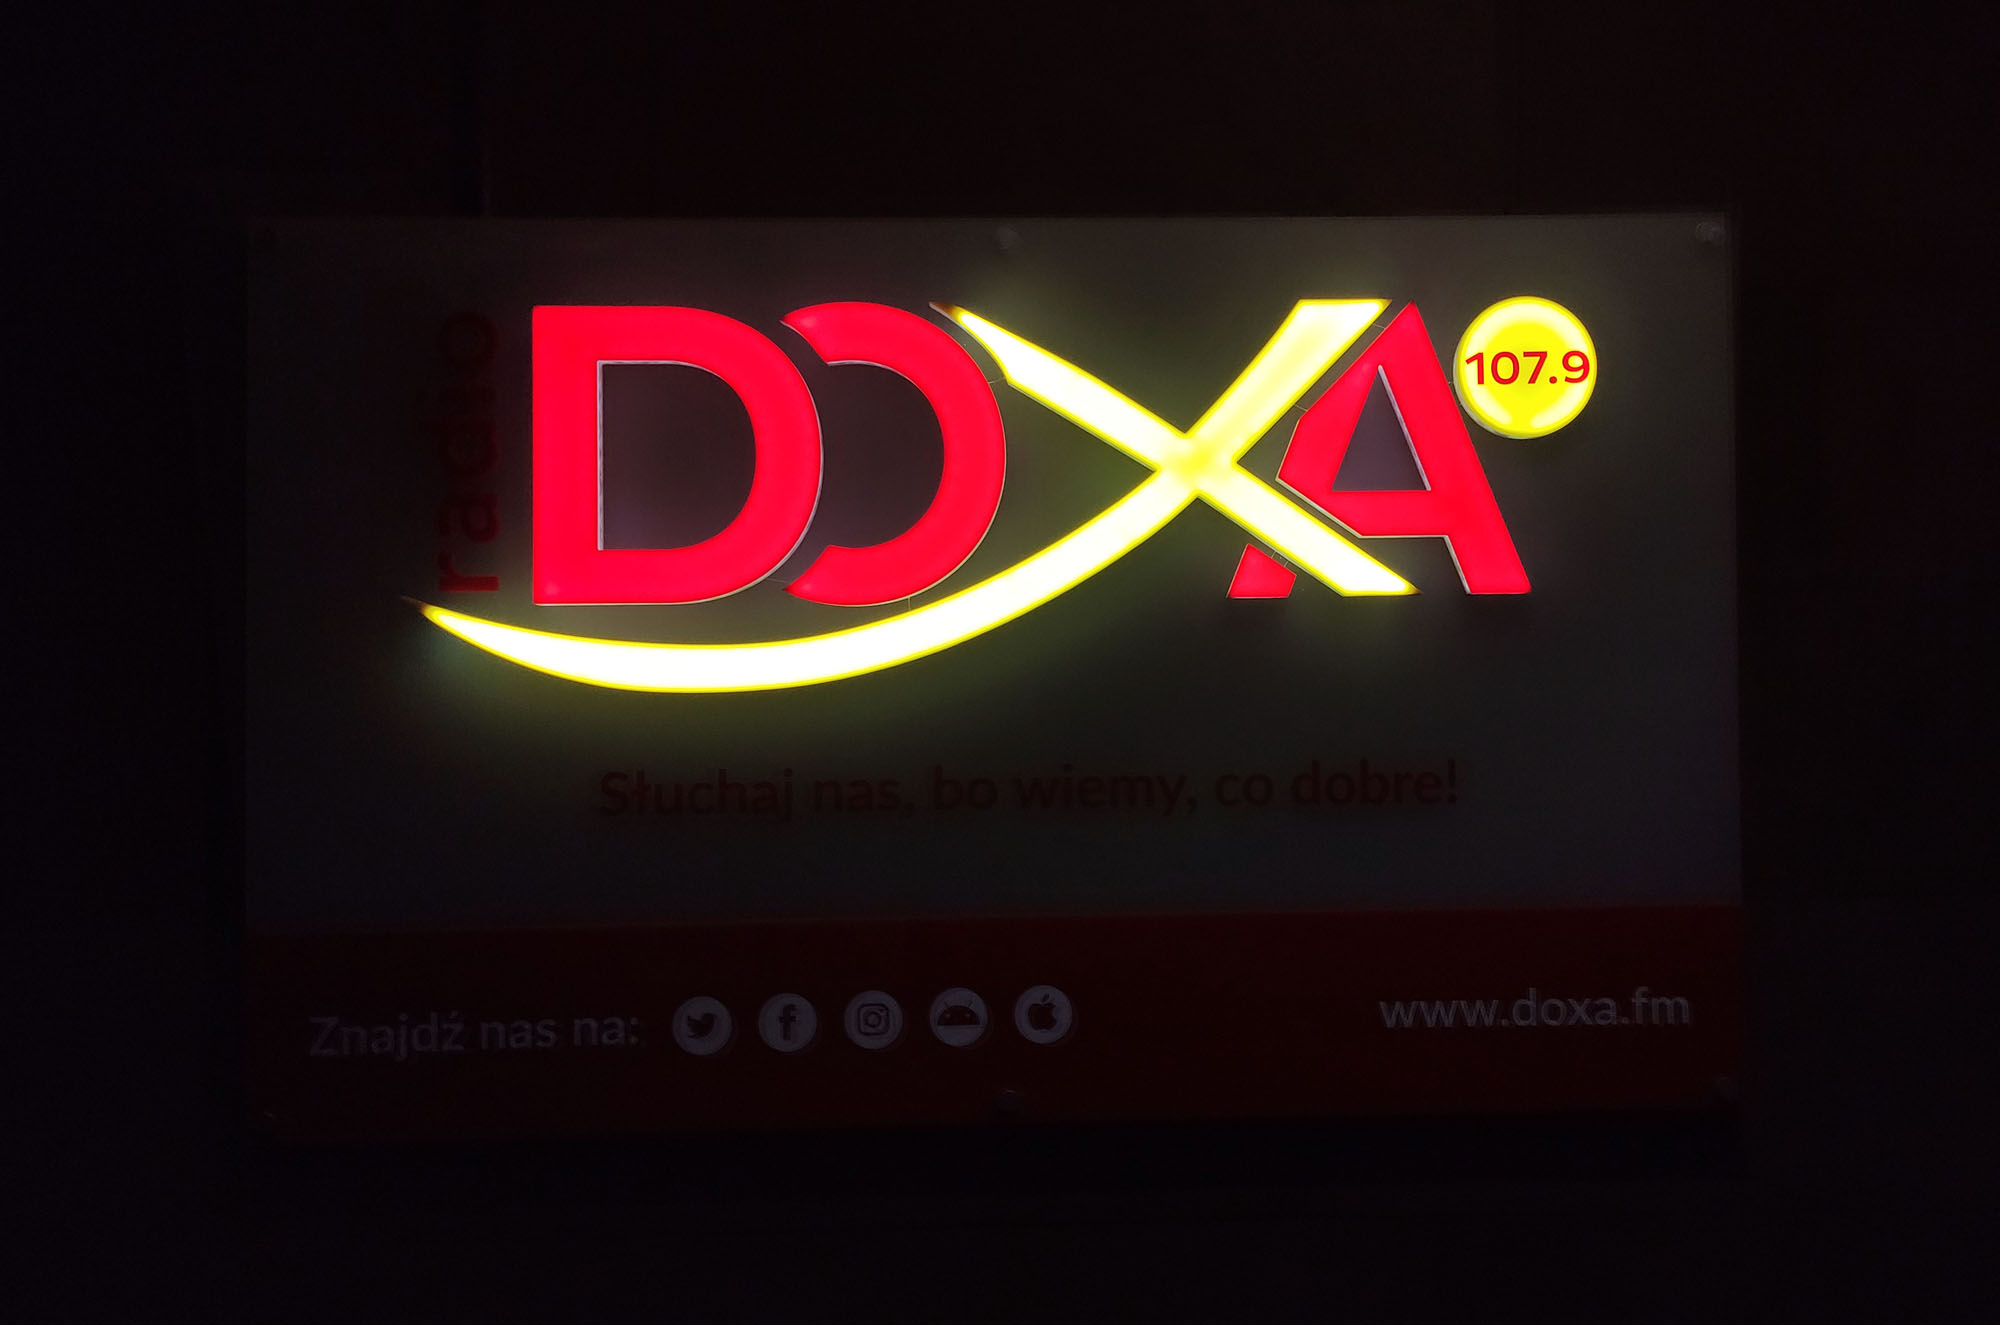 Neon LED - DOXA.fm